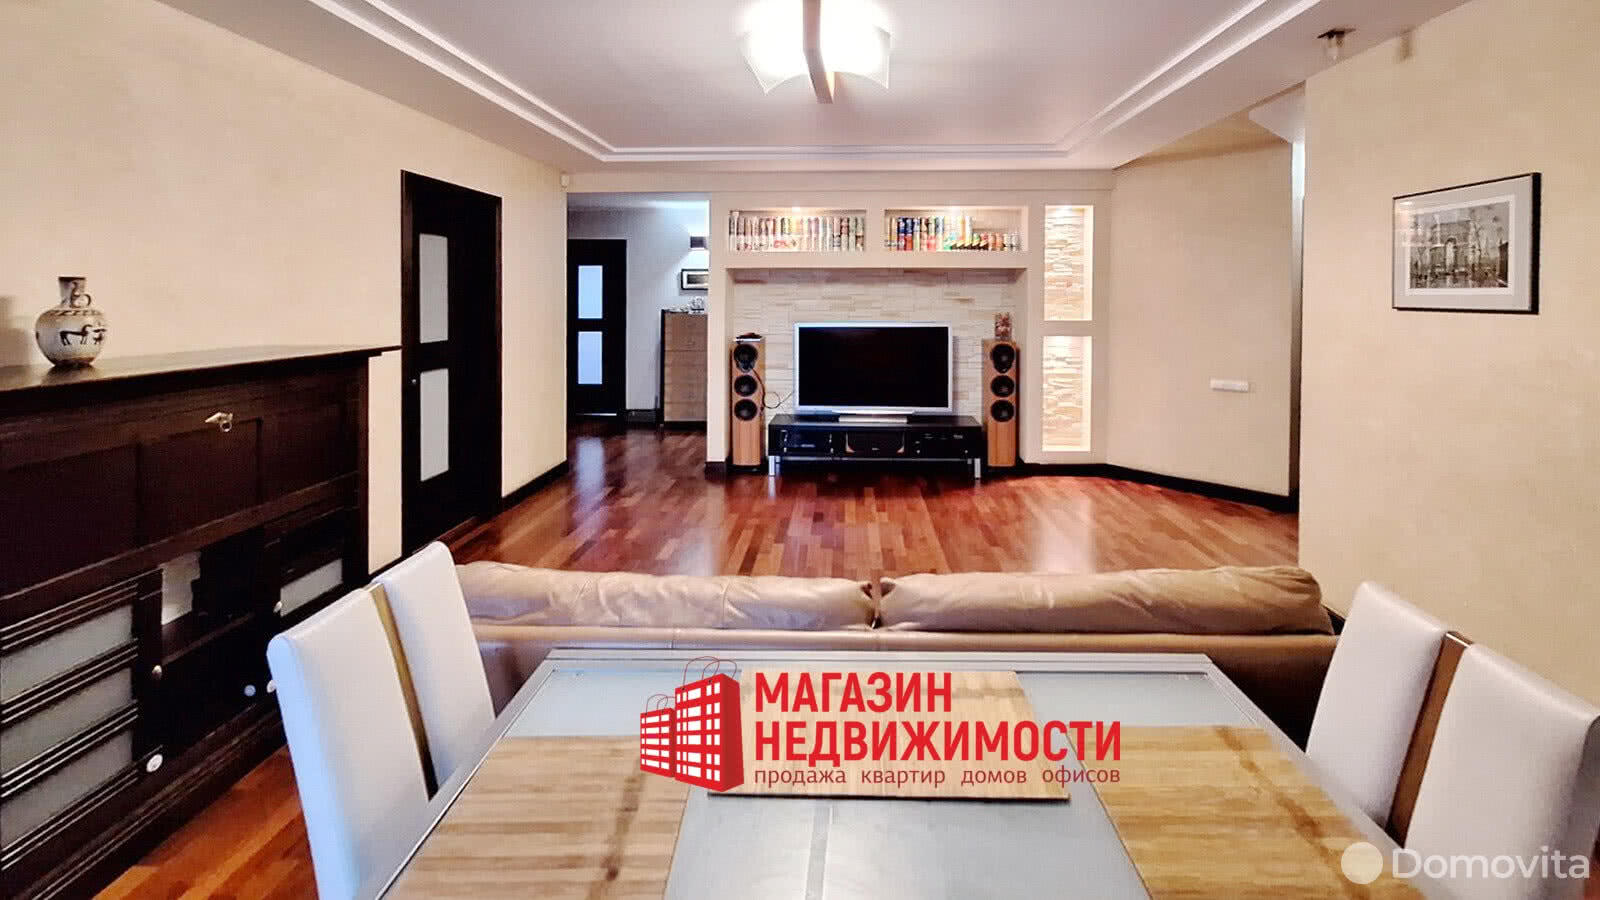 квартира, Гродно, пр-т Клецкова, д. 13Б, стоимость продажи 362 779 р.